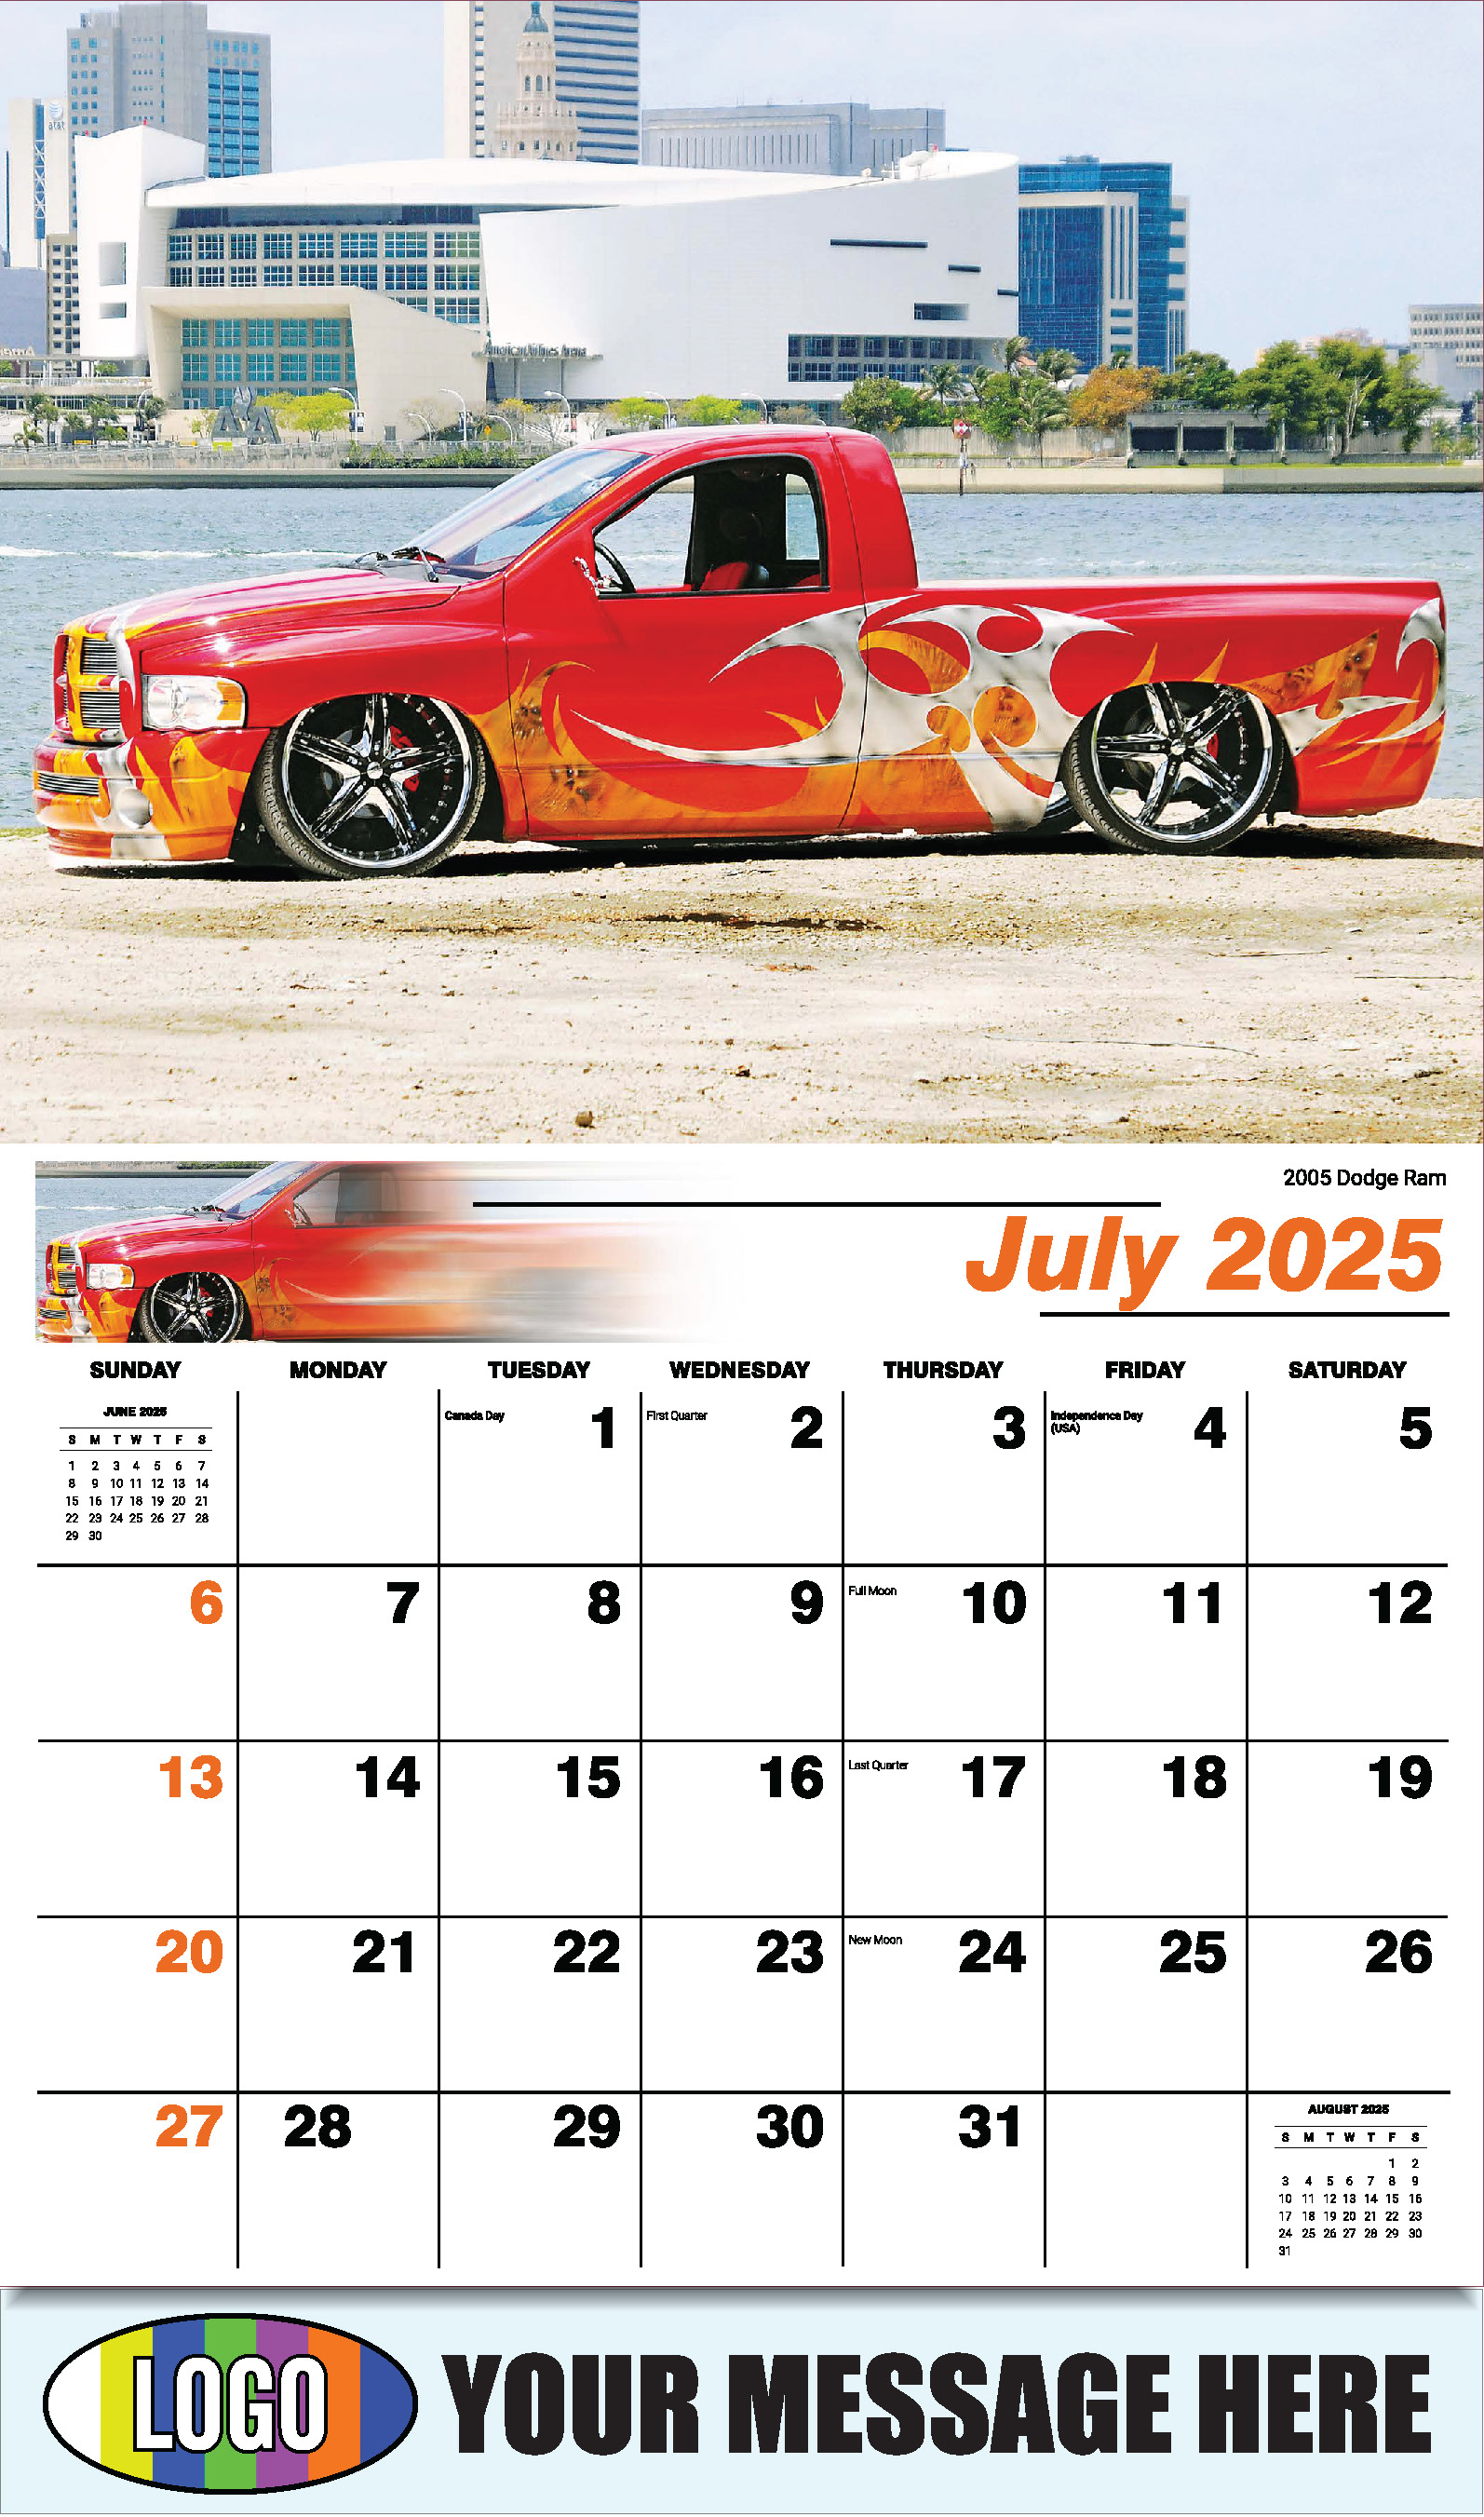 Pumped-Up Pickups 2025 Automotive Business Promo Calendar - July